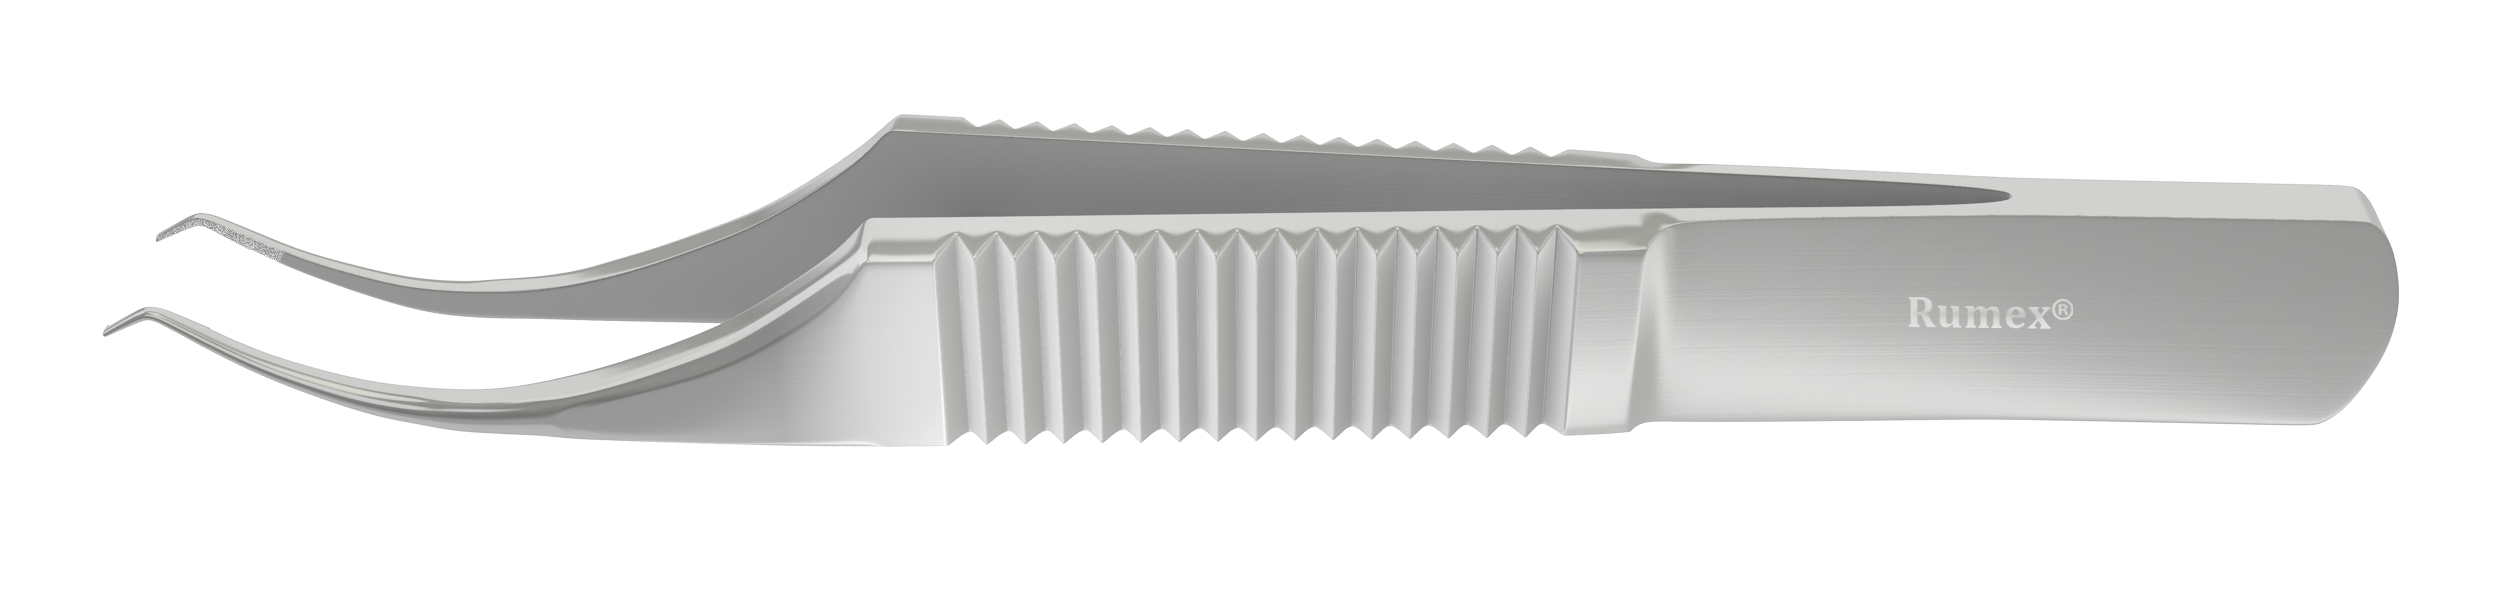 999R 4-0504S Colibri-Bonn Corneal Forceps, 0.12 mm, 1x2 Teeth, Flat Handle, Length 77 mm, Stainless Steel